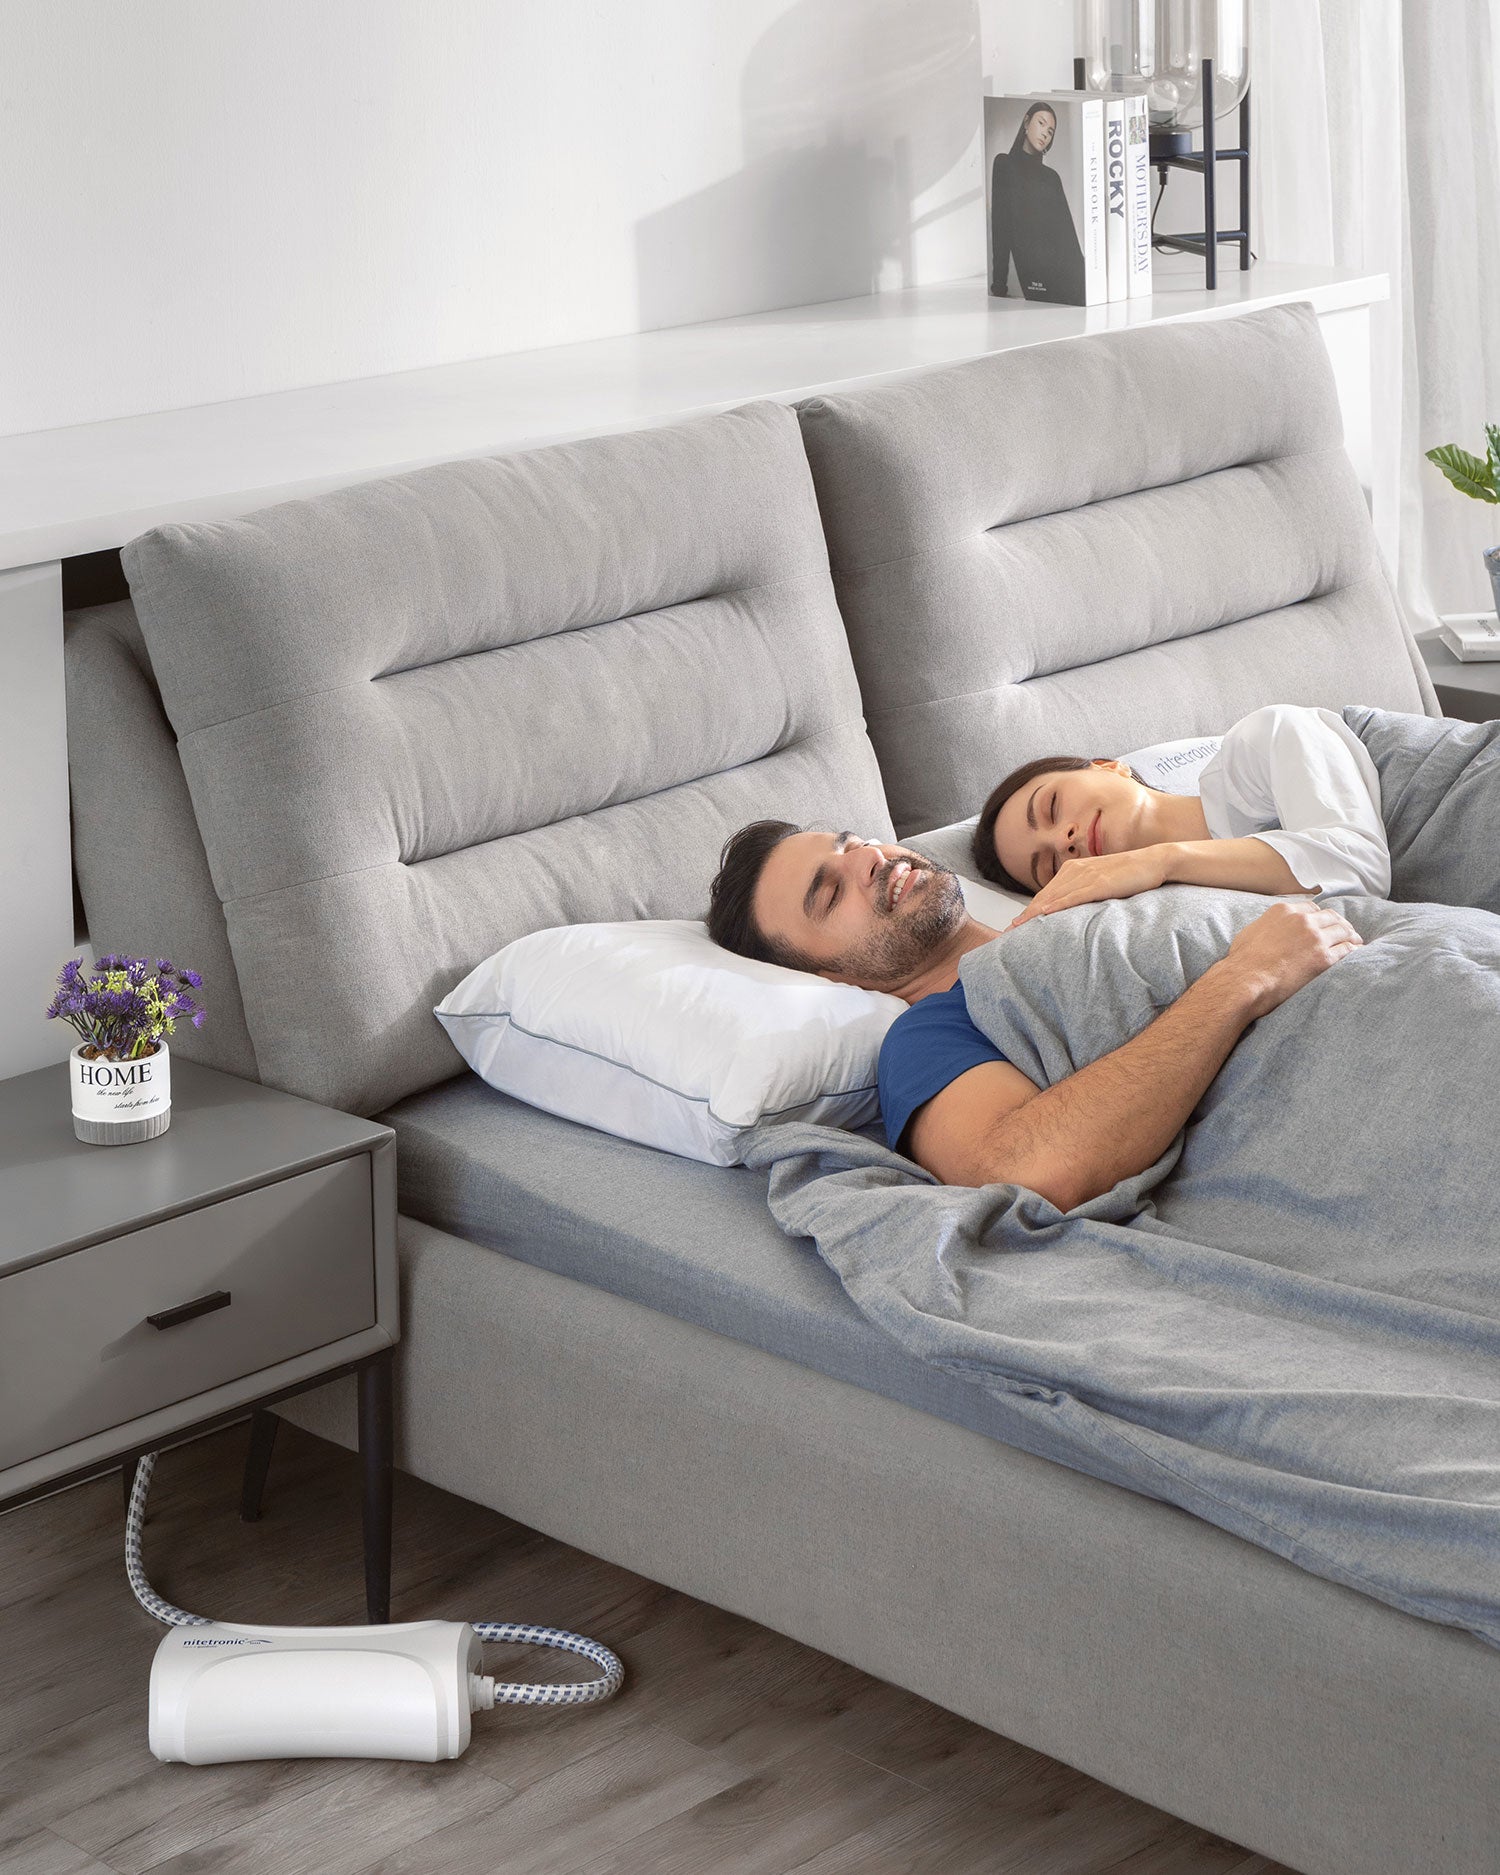 Nitetronic Z1 Anti Snore Pillow Slide Image 6